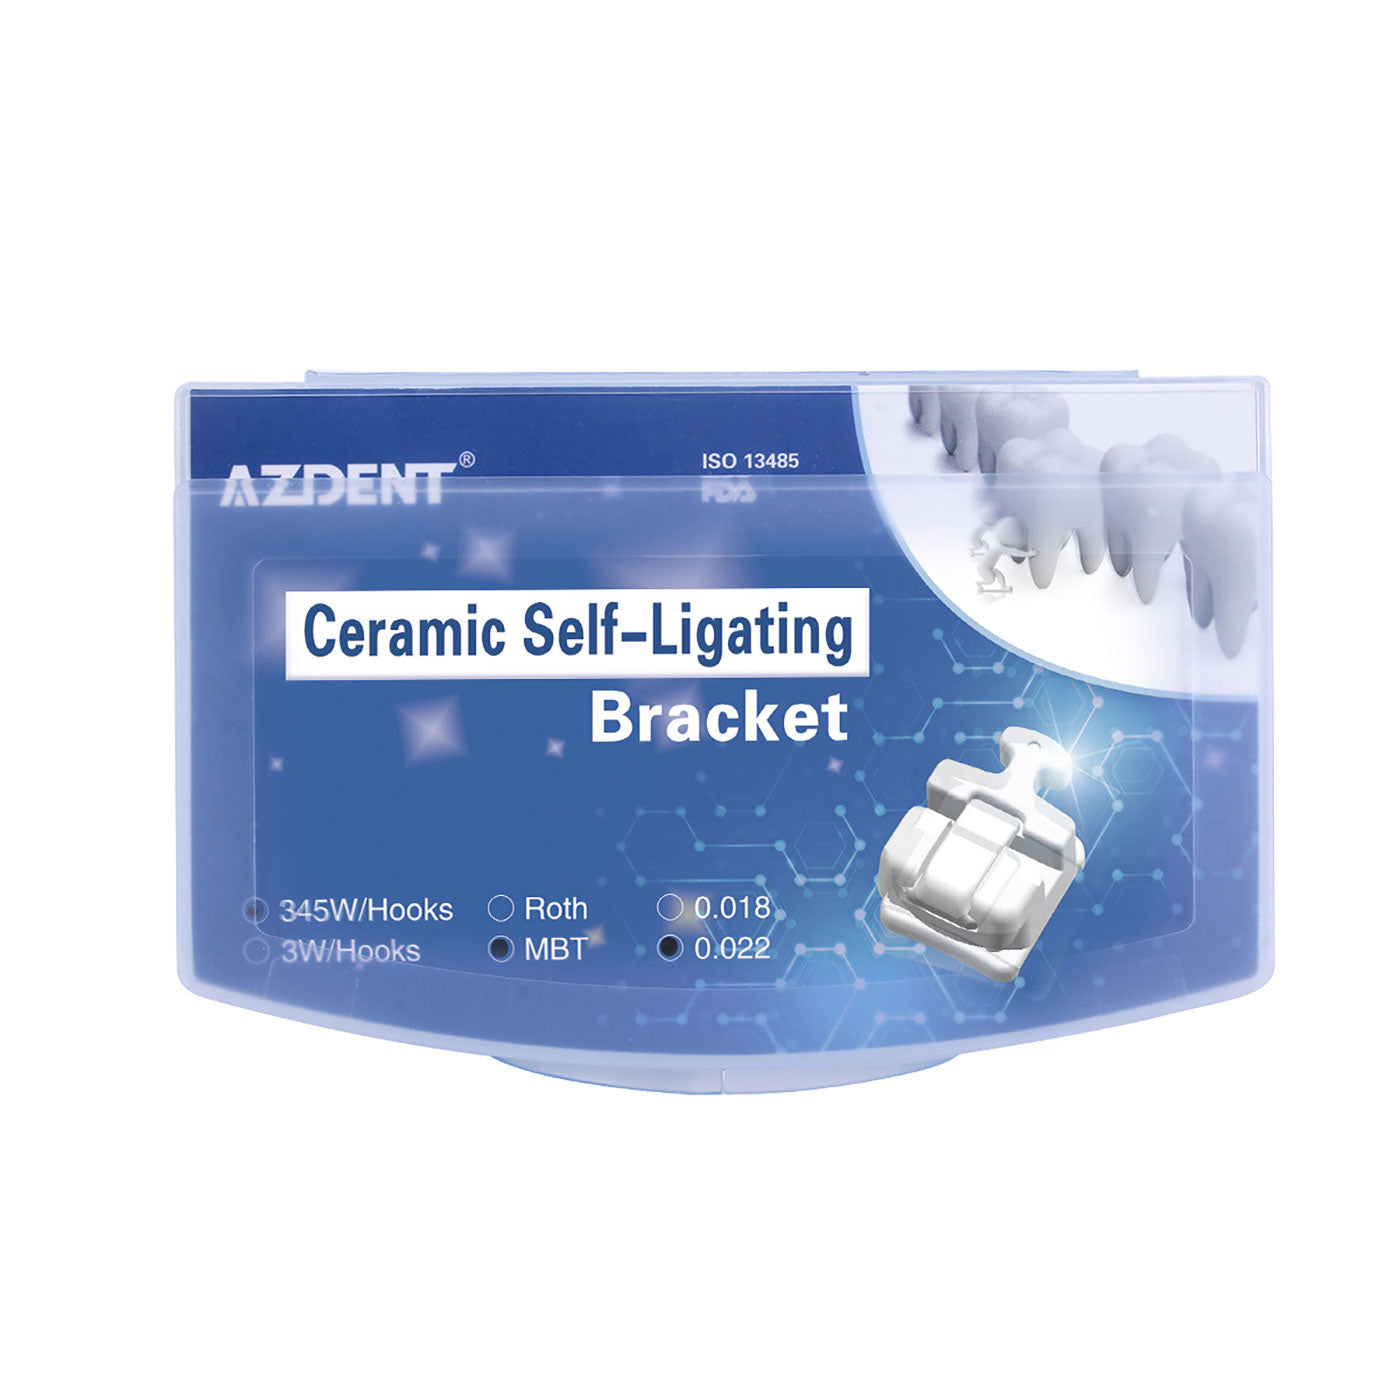 AZDENT Dental Orthodontic Self-ligating Ceramic Bracket MBT 0.022 Hooks on 345 Third Generation 20pcs/Box - azdentall.com